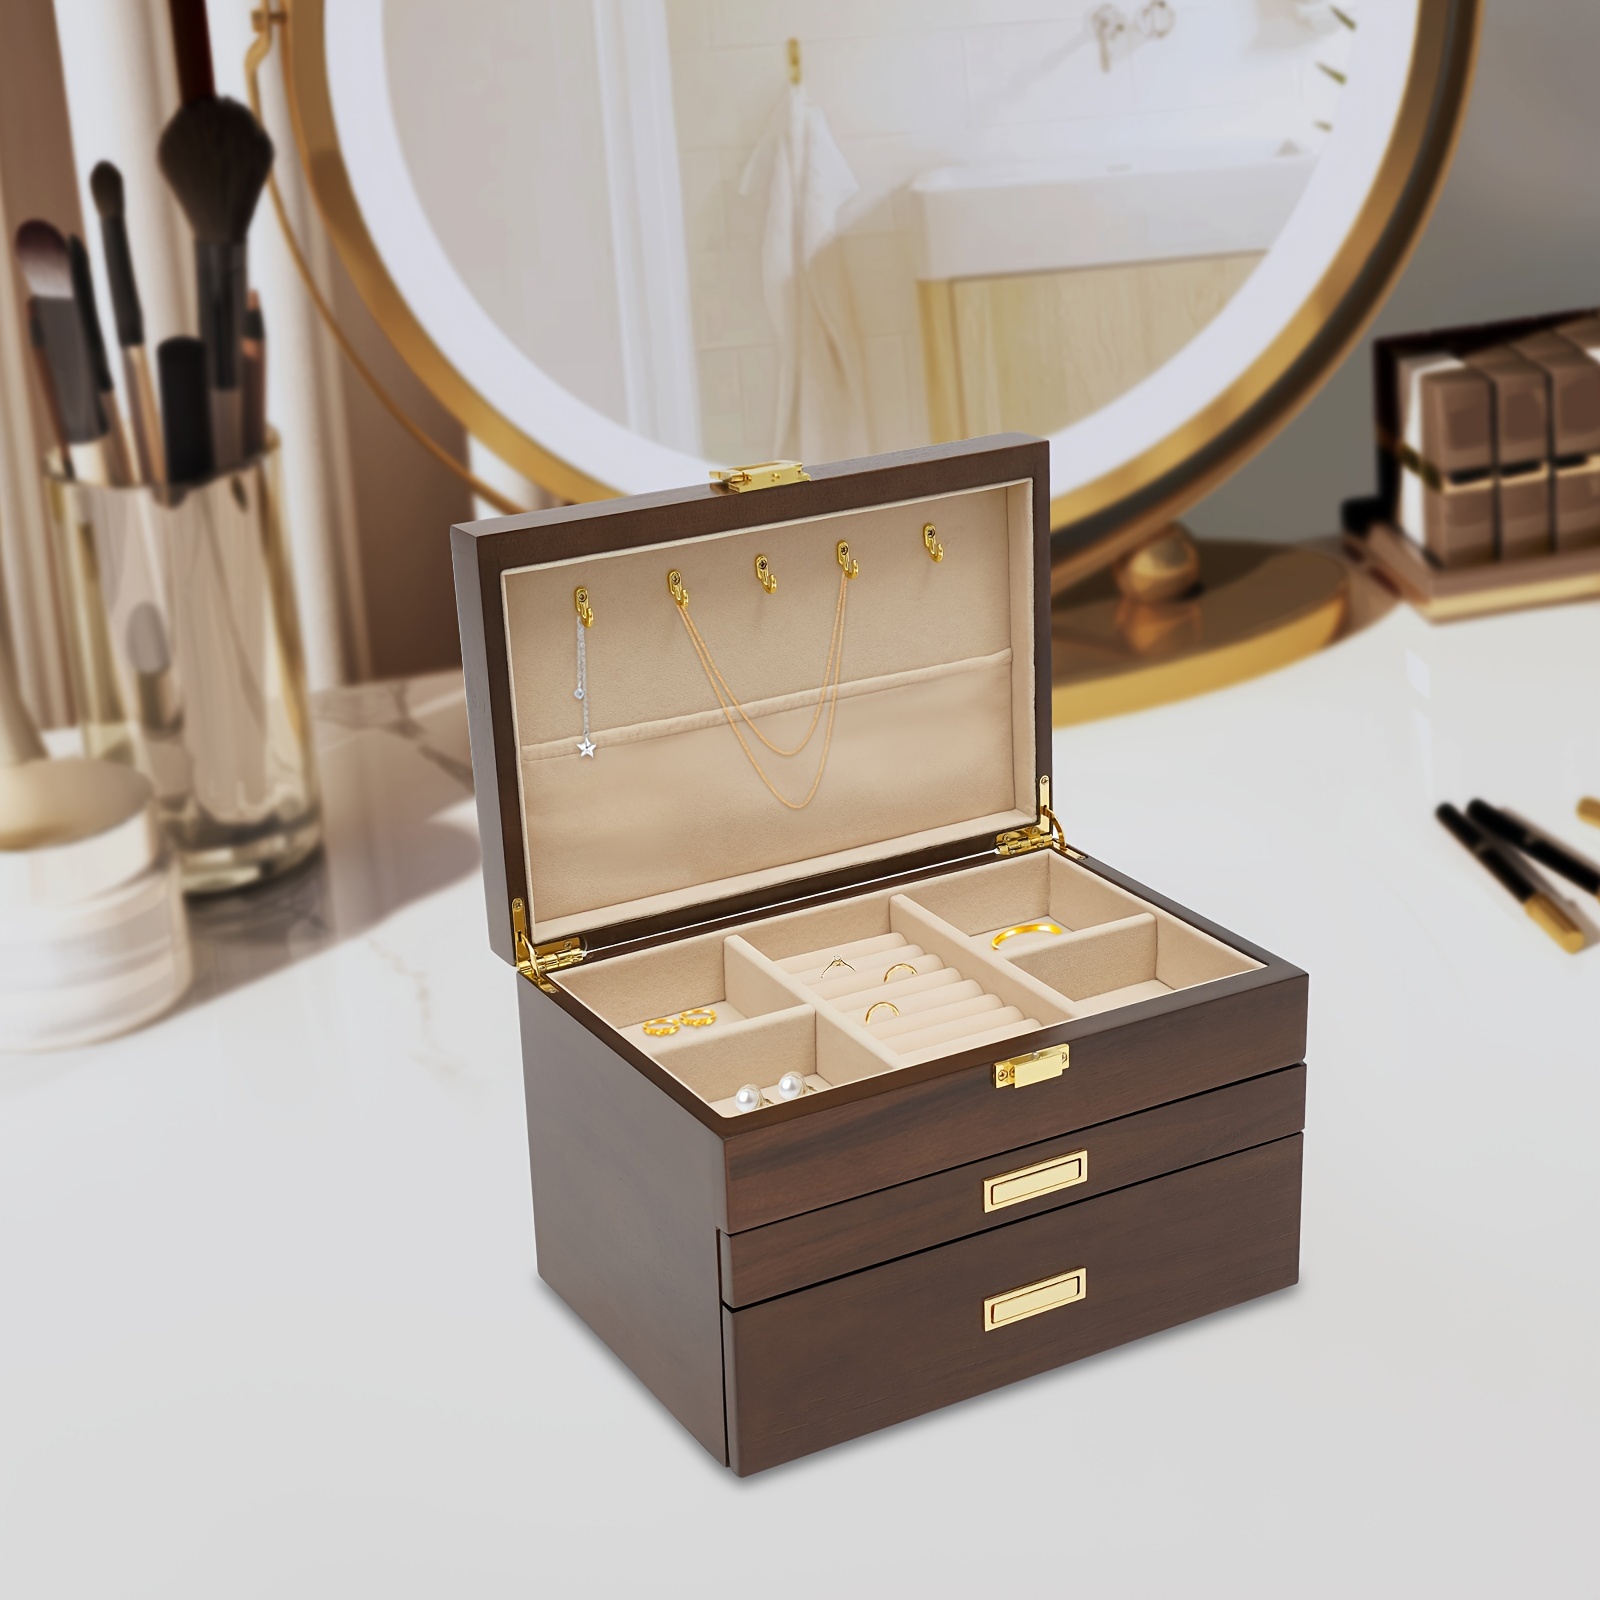 

Large Wooden Jewelry Storage Box 3 Layers Organizer 2 Drawers Cabinet Gift